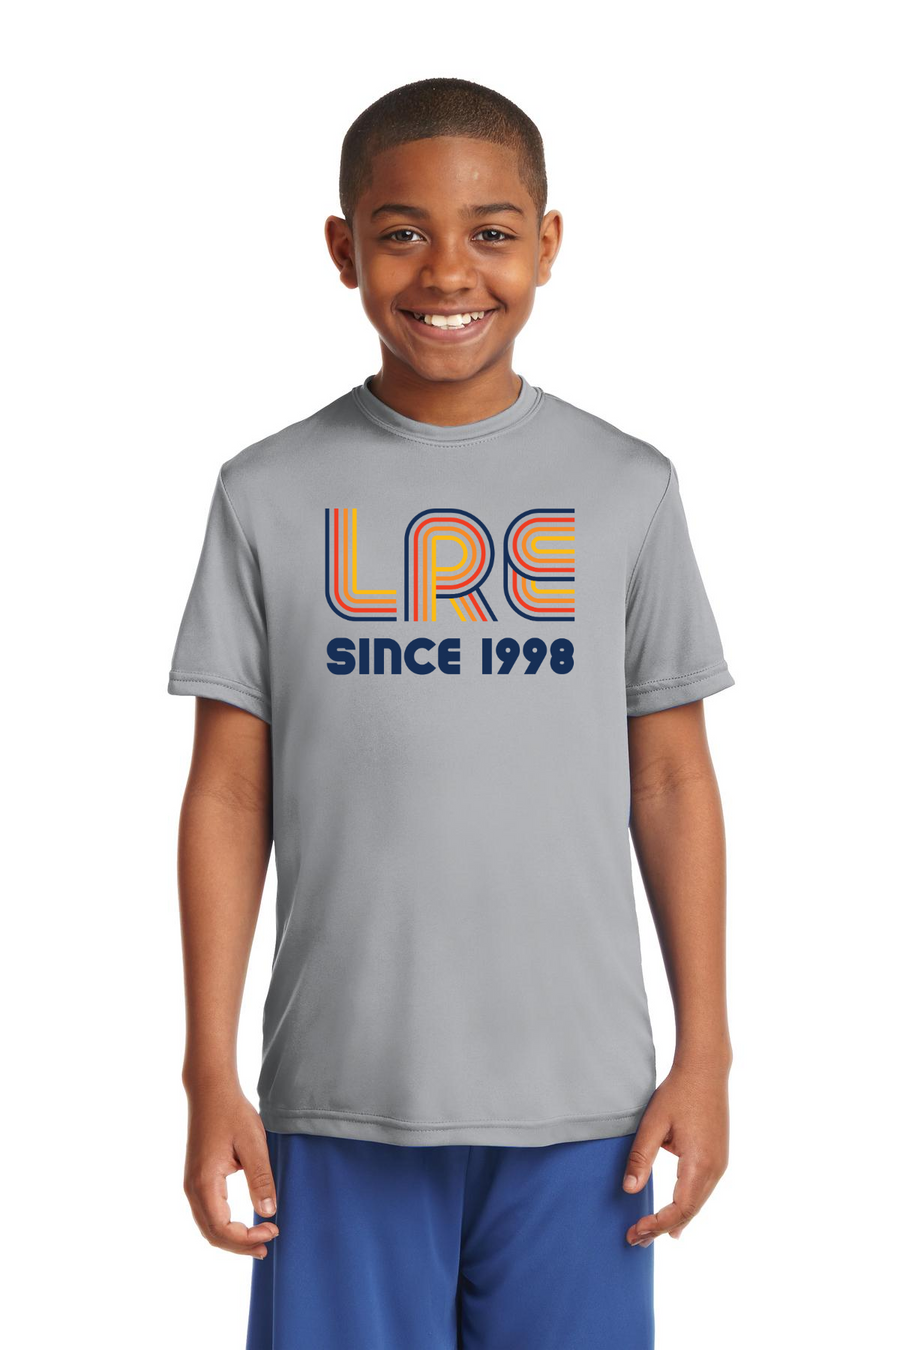 Lang Ranch Elm Spirit Wear 2023-24 On-Demand-Unisex Dryfit Shirt LRE 1998 Logo